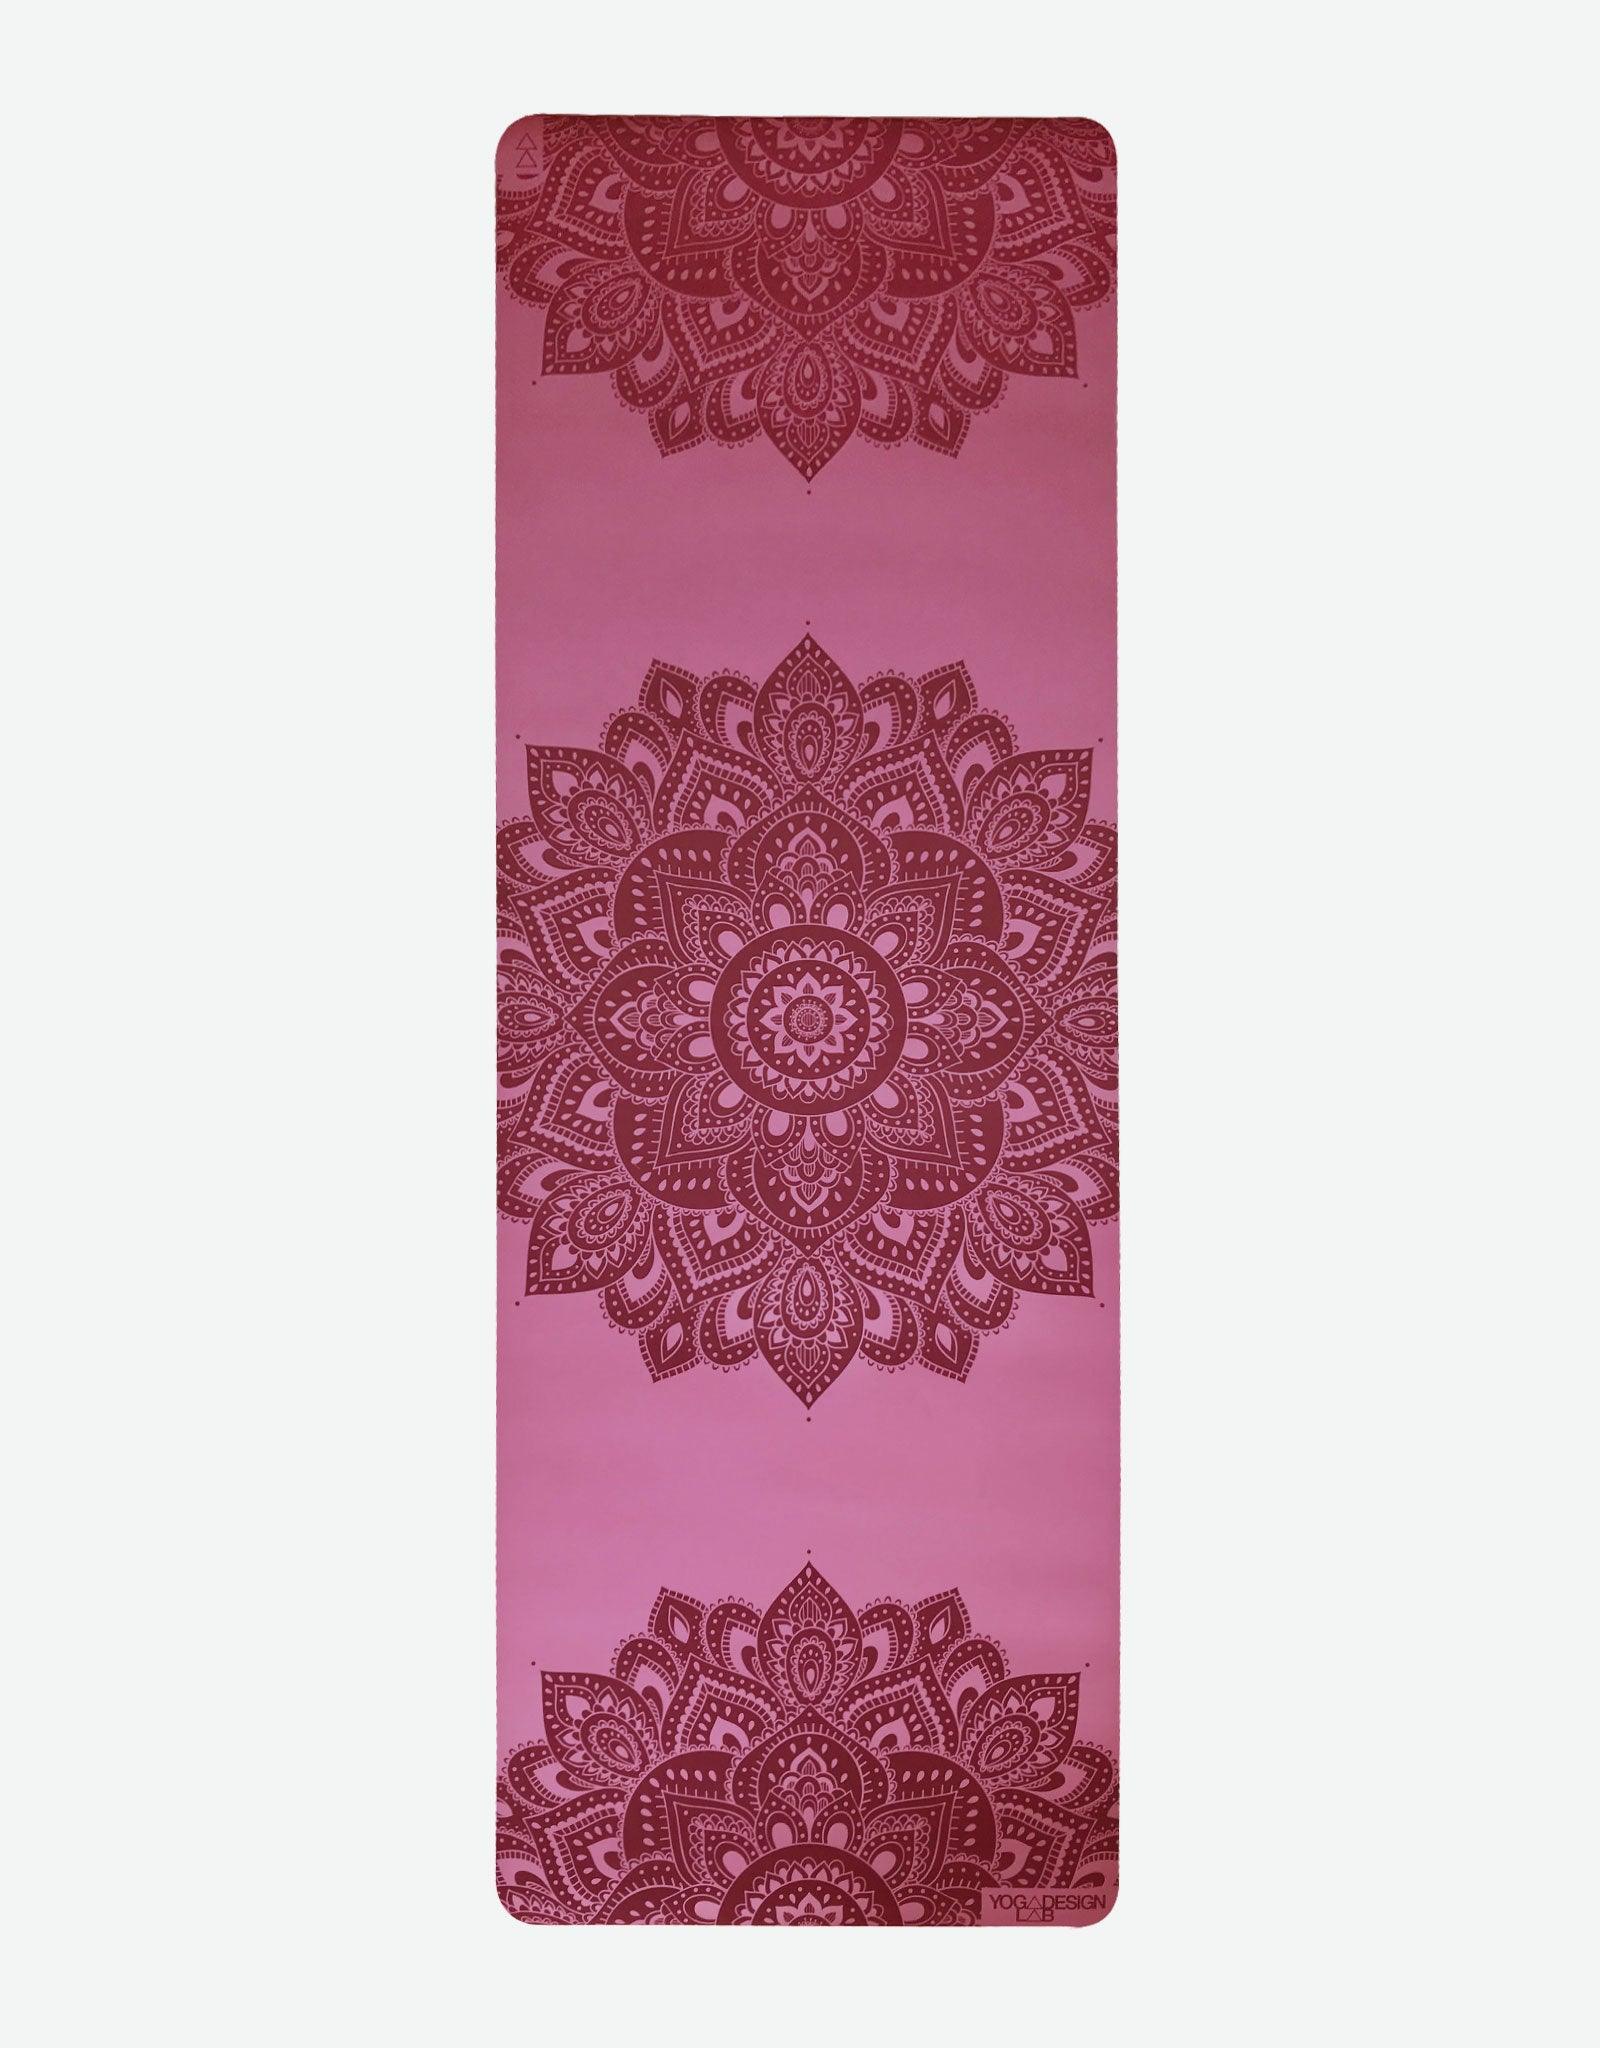 Infinity Yoga Mat - 5mm - Mandala Rose - The Best Yoga Mat provides great support - Yoga Design Lab 